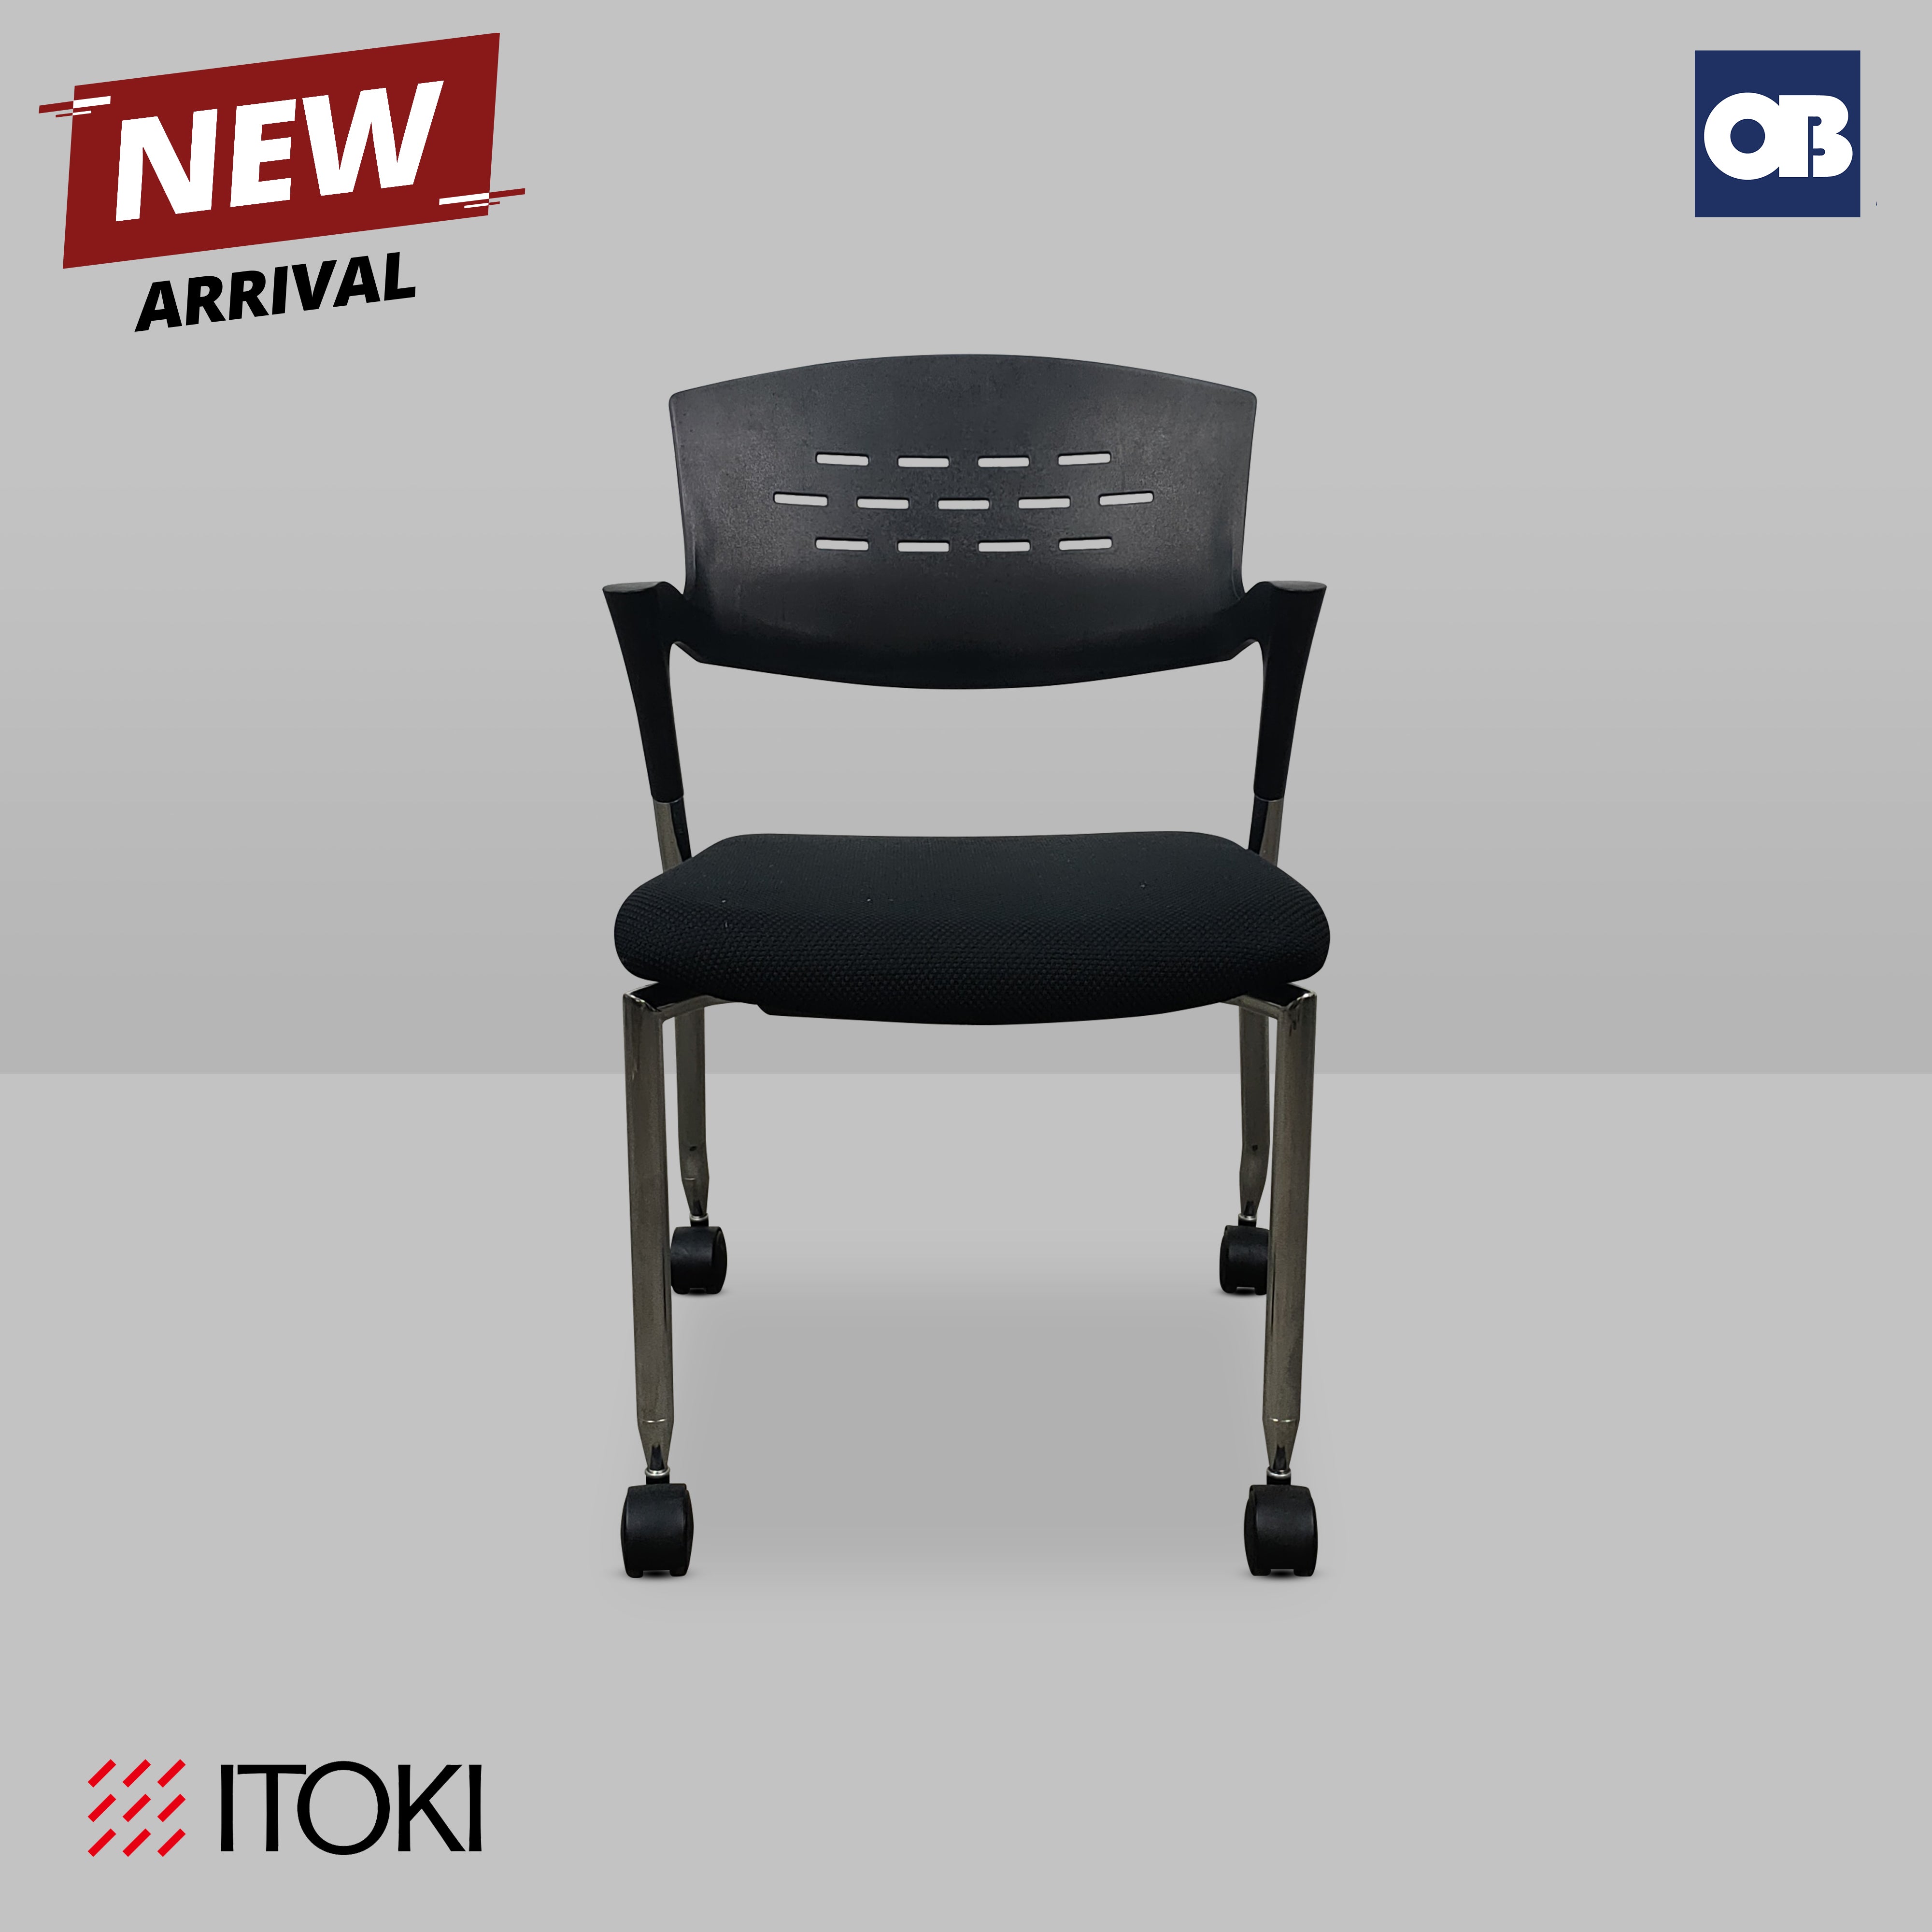 Itoki Stackable Chair